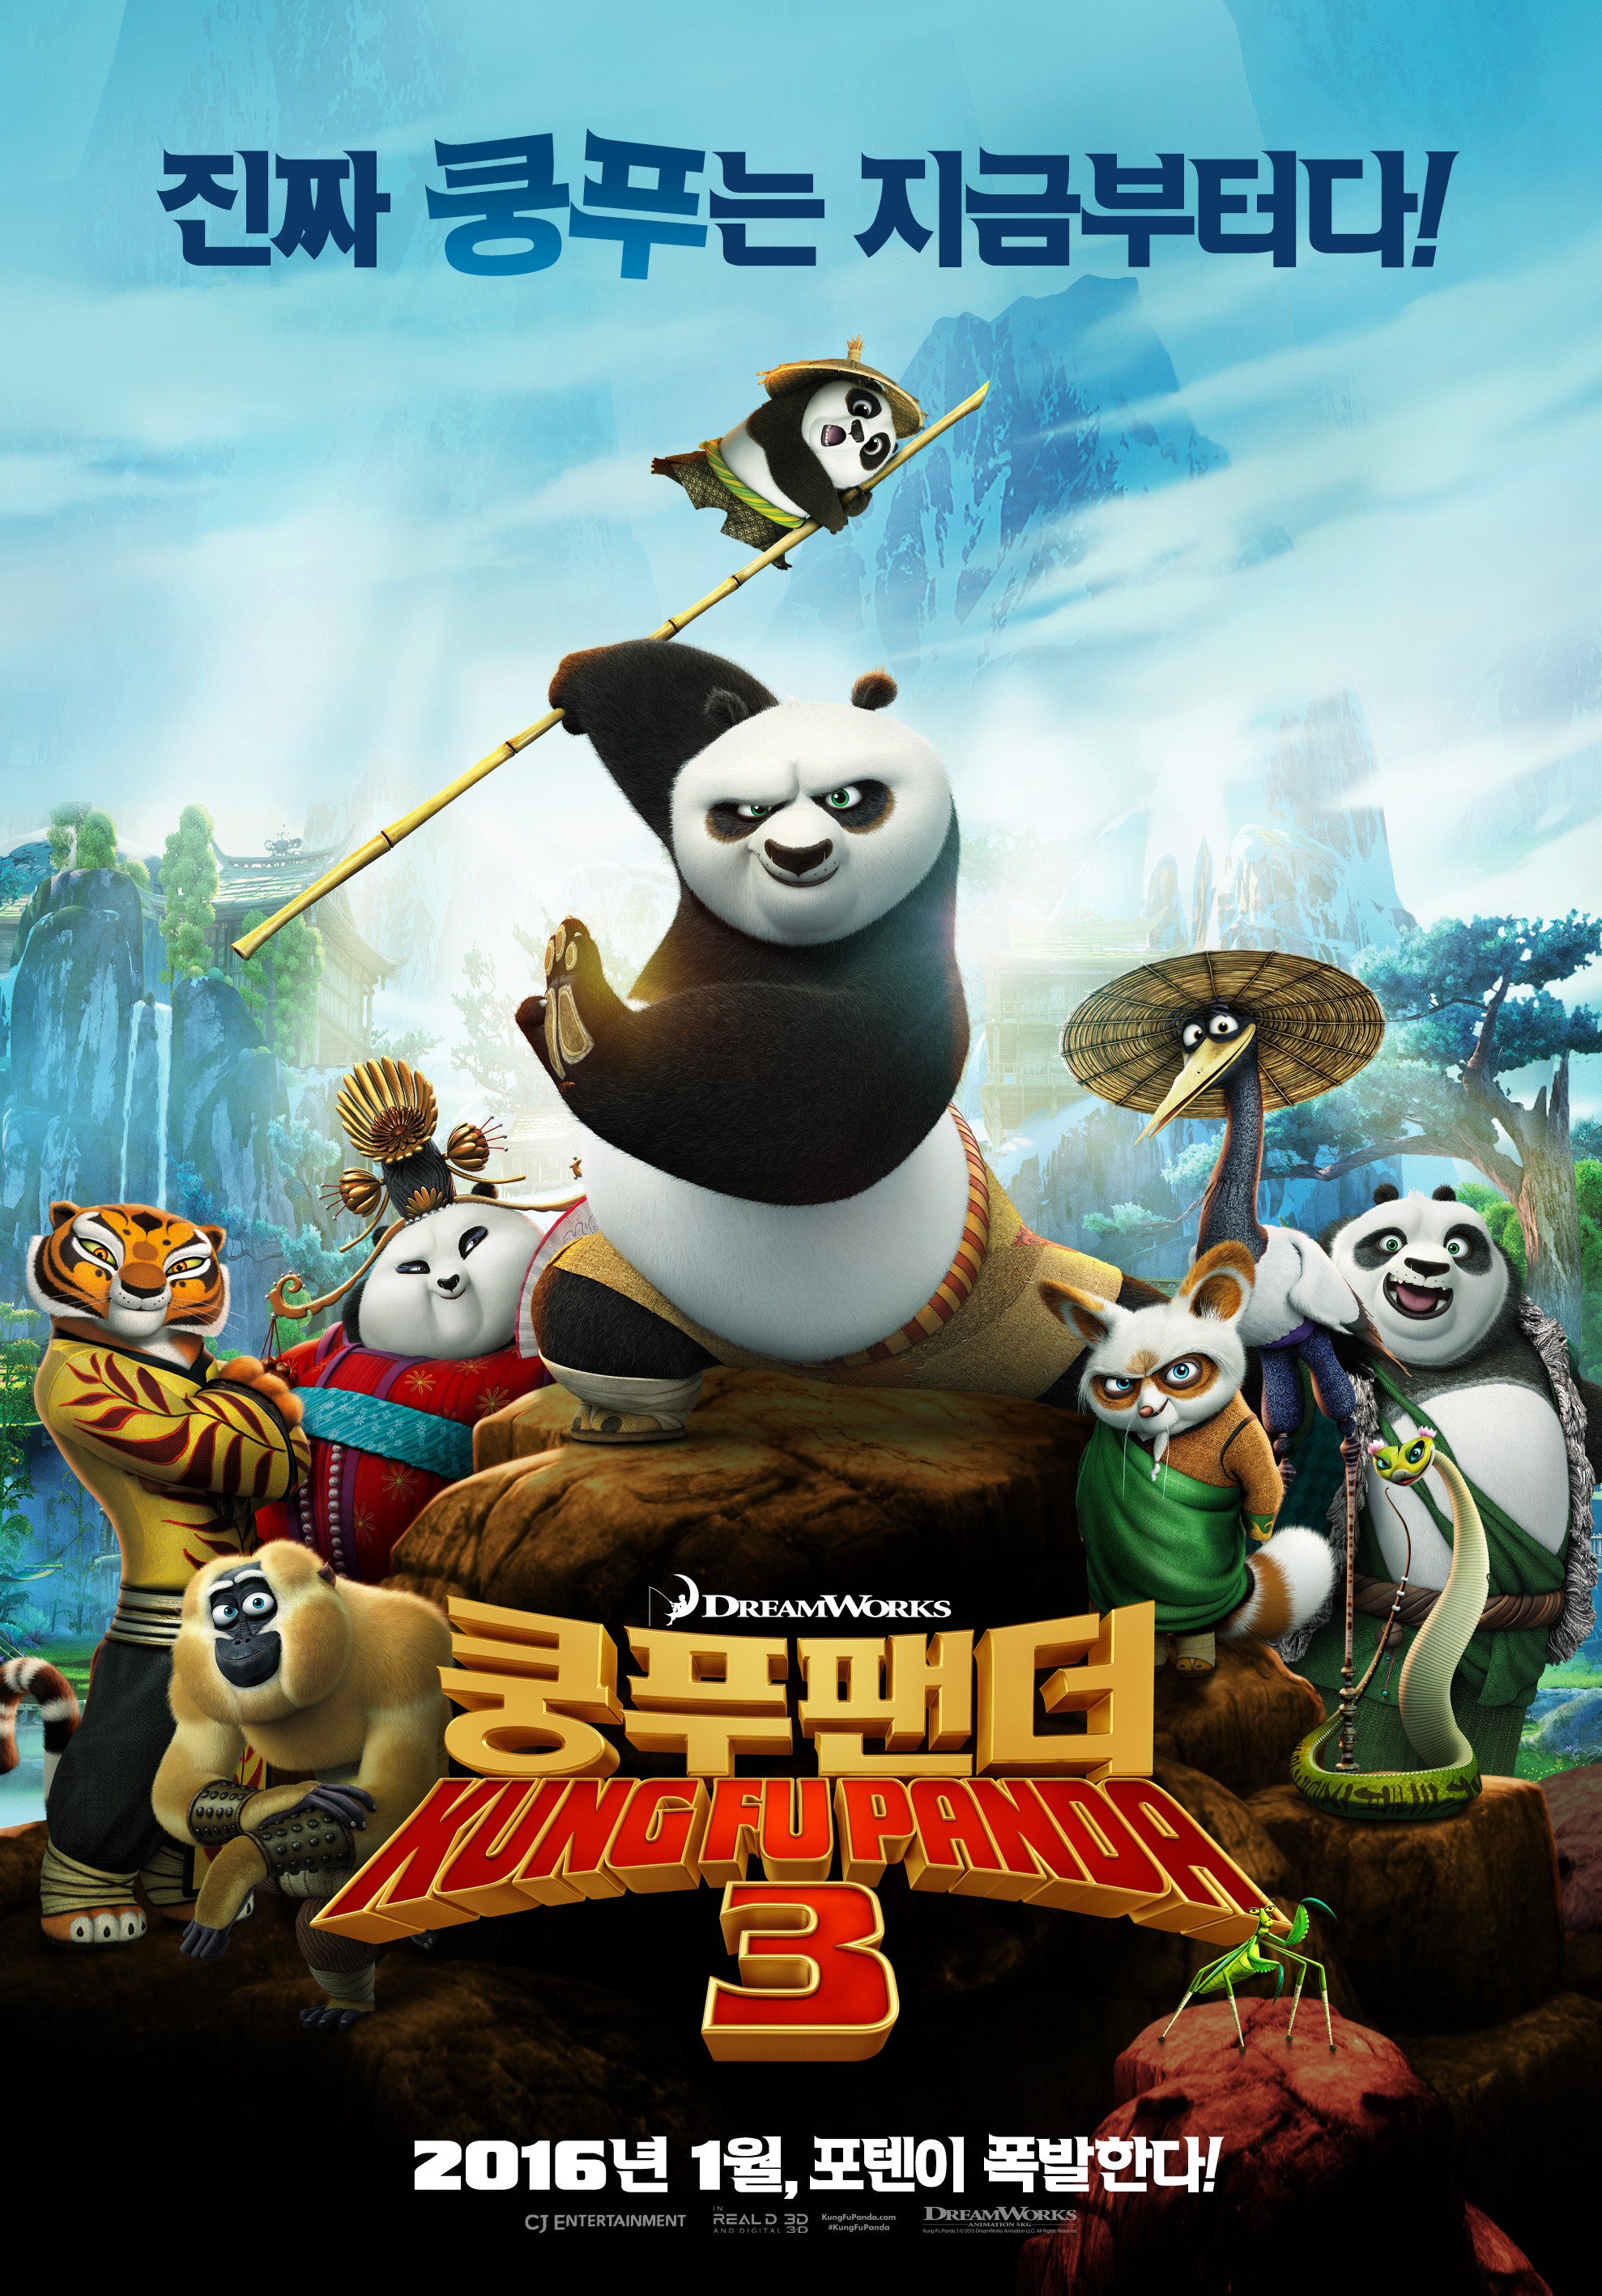 Mega Sized Movie Poster Image for Kung Fu Panda 3 (#4 of 22)